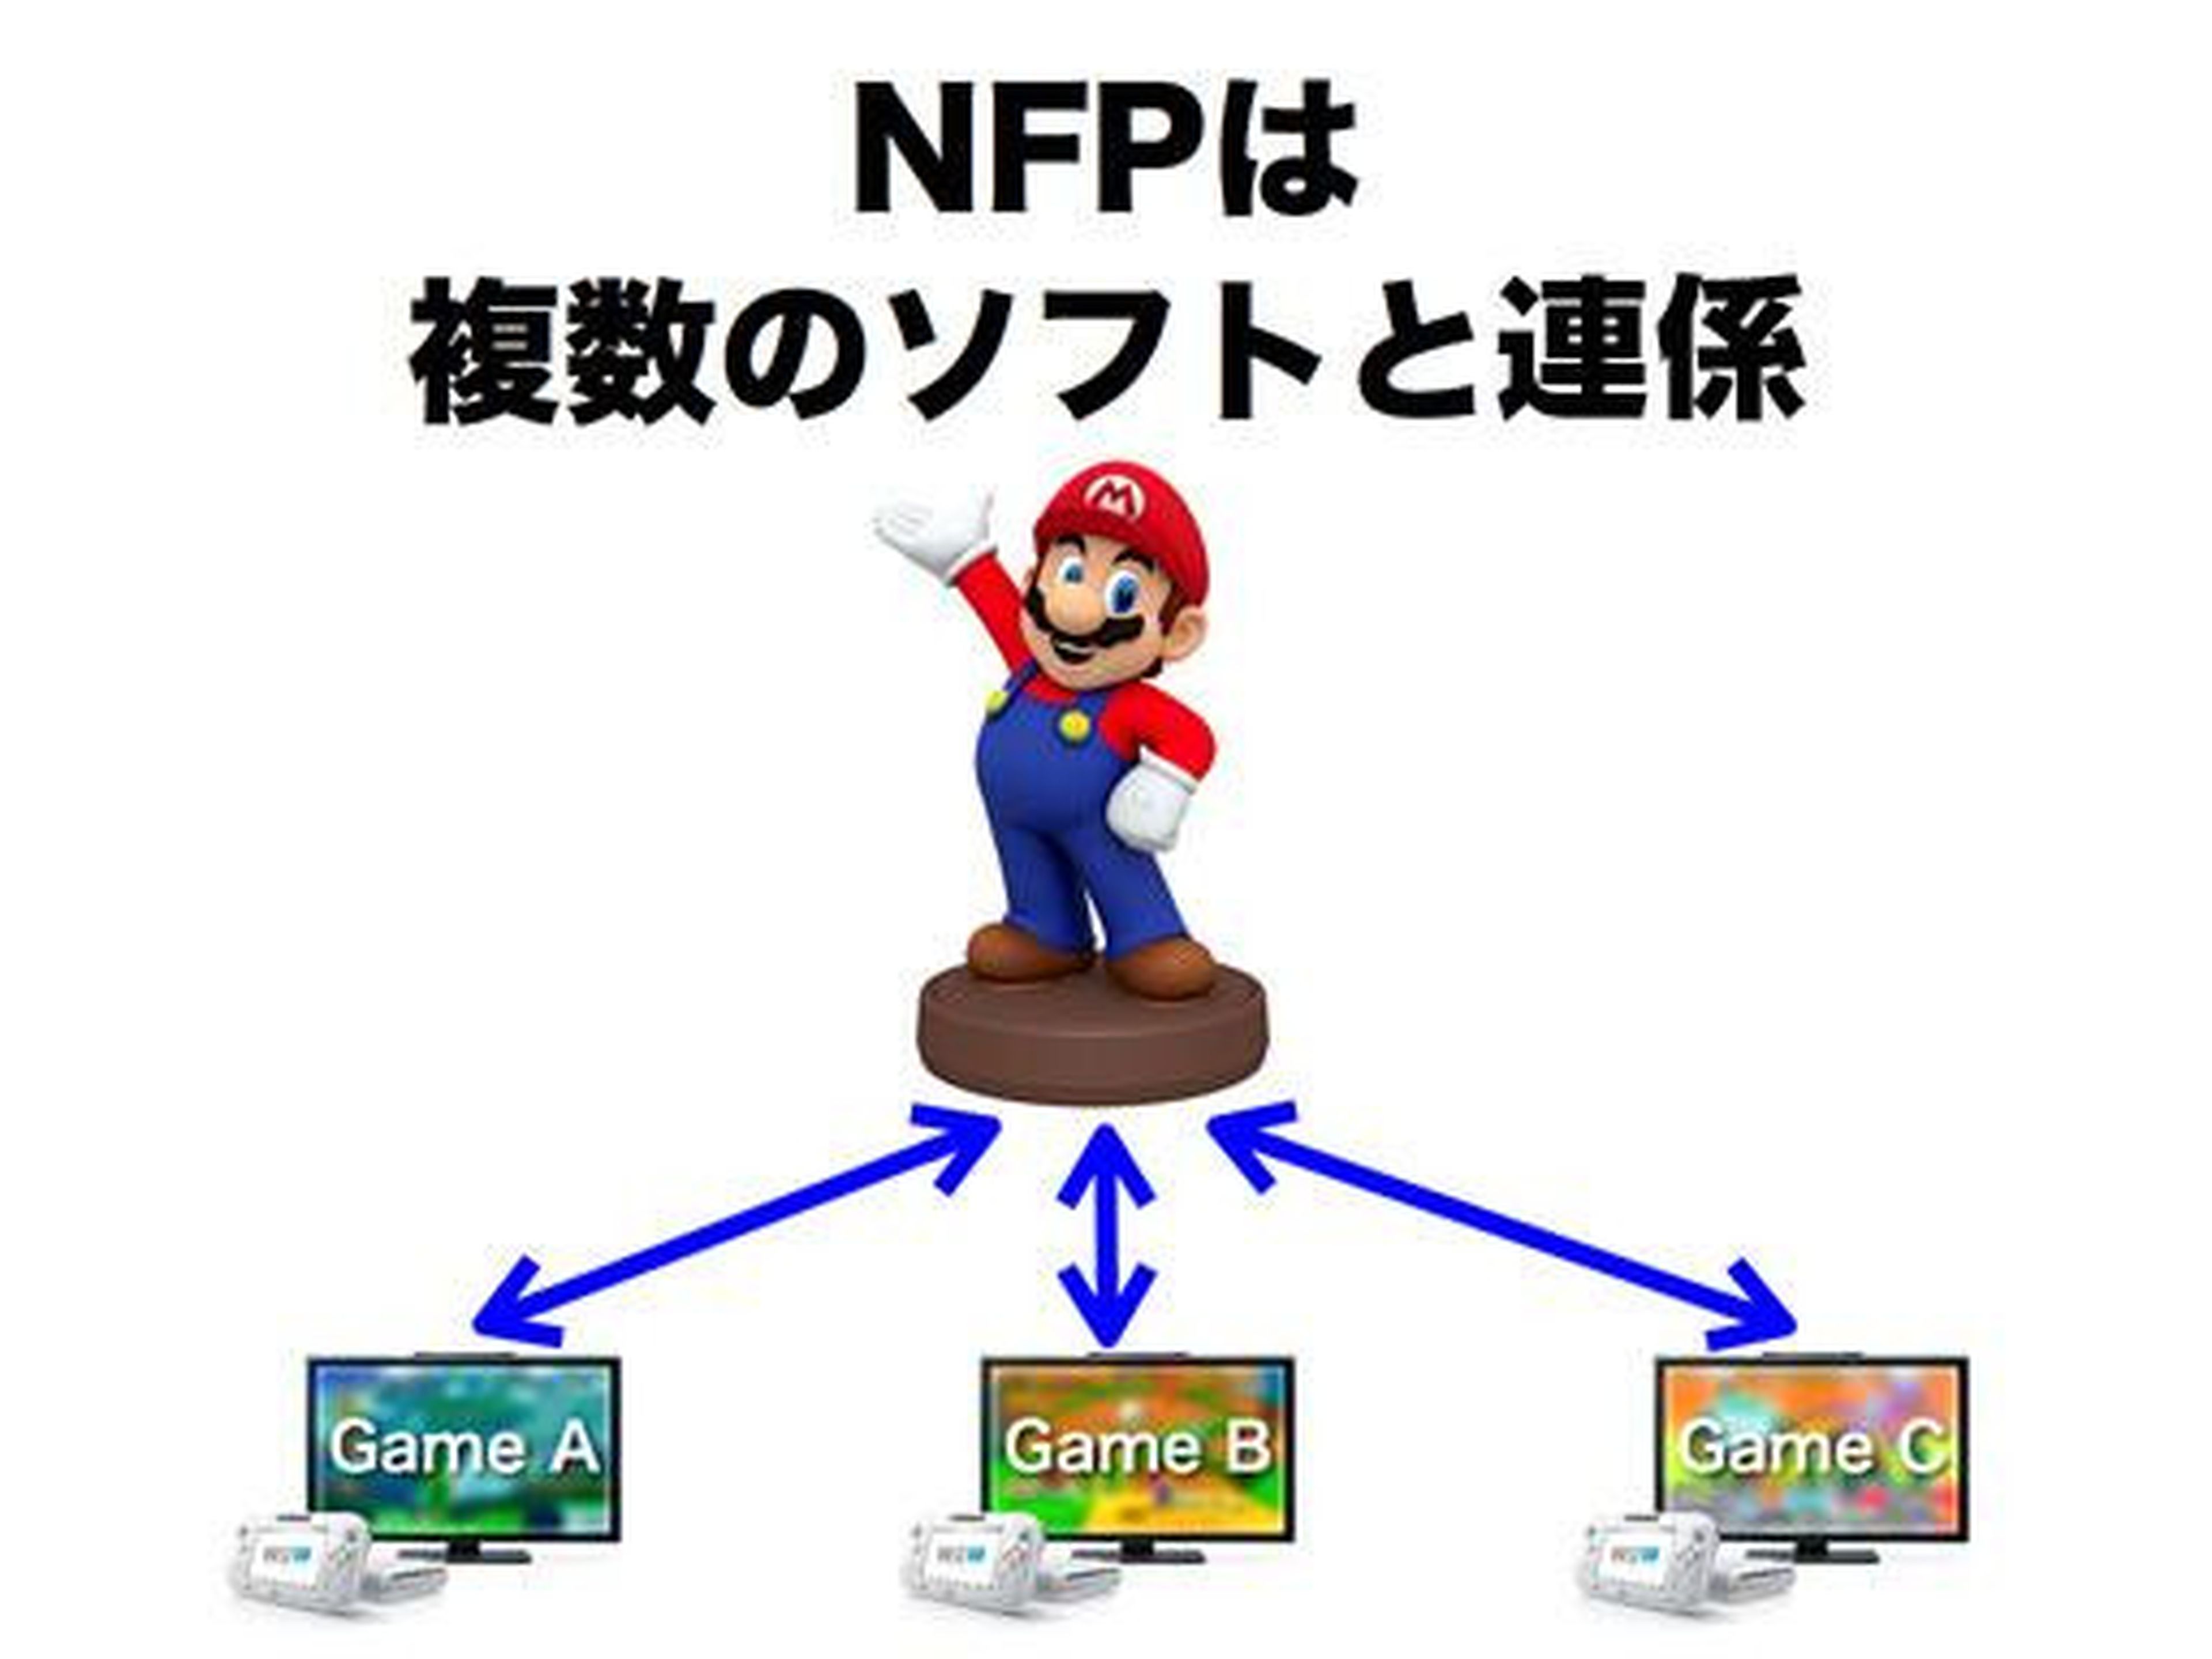 Nintendo Figurines Platform